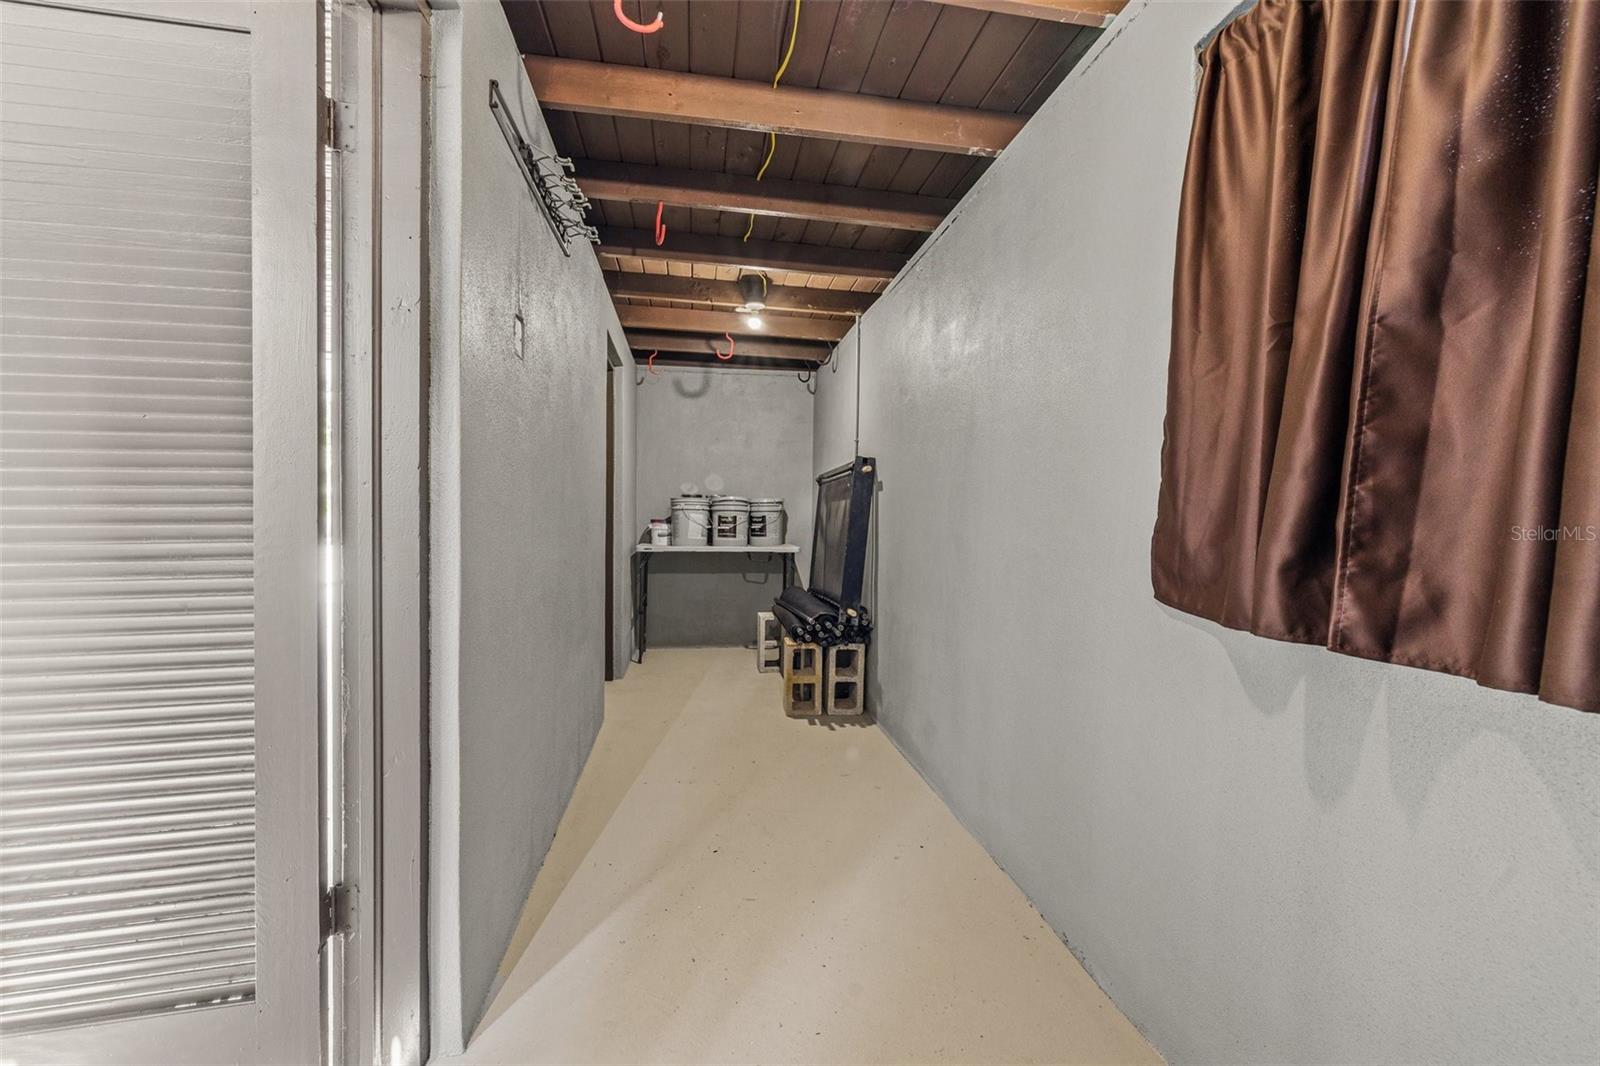 Interior of Workshop/Storage Room